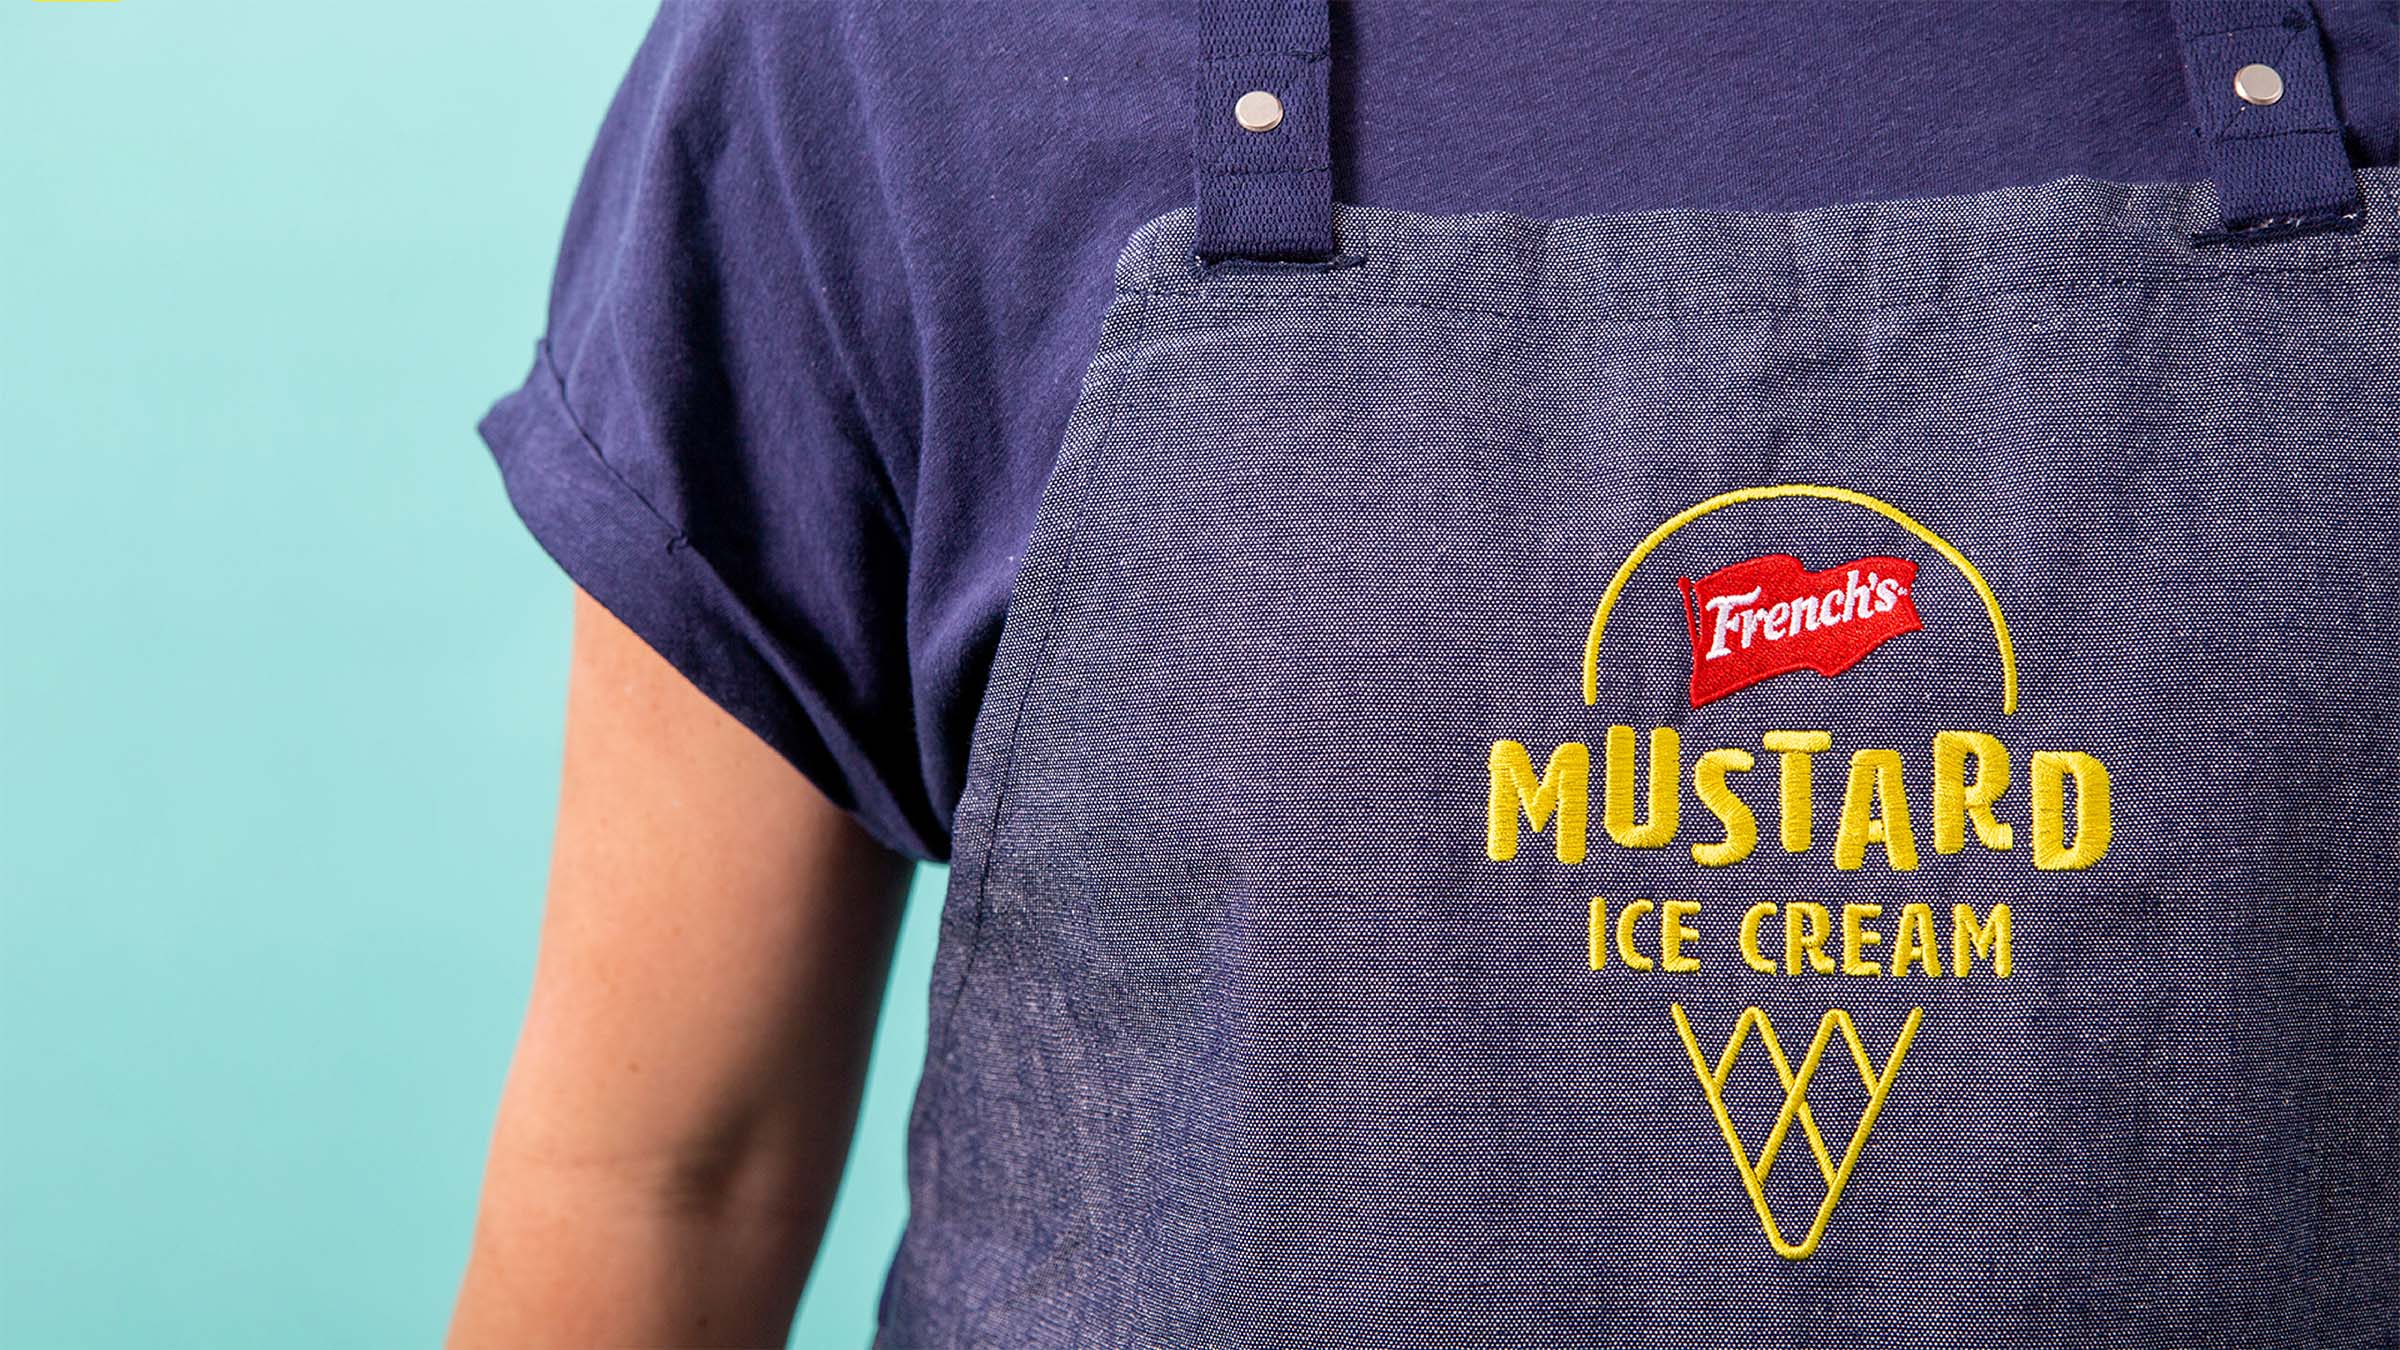 Mustard Ice Cram apron